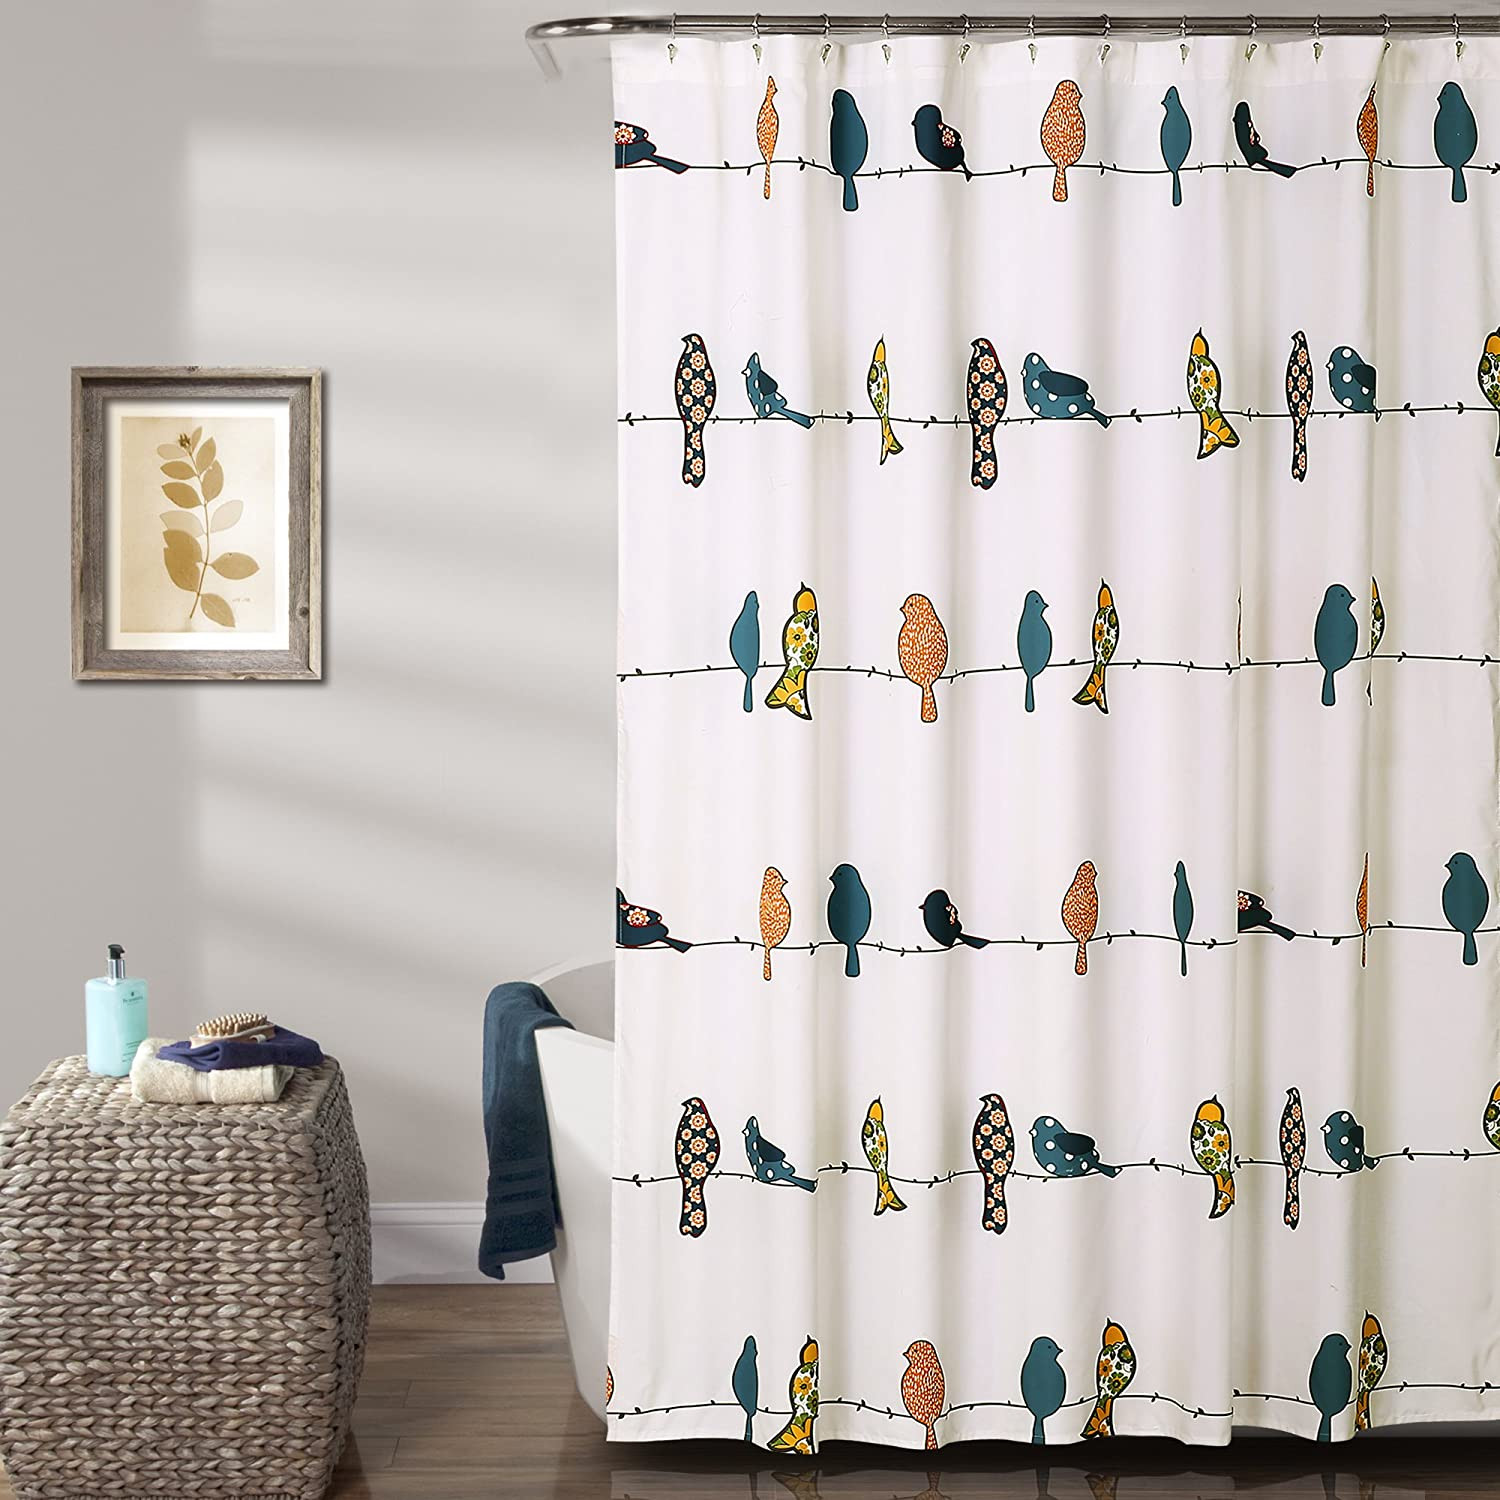 Bird Bathroom Decor
 Lush Decor Rowley Shower Curtain Floral Animal Bird Print